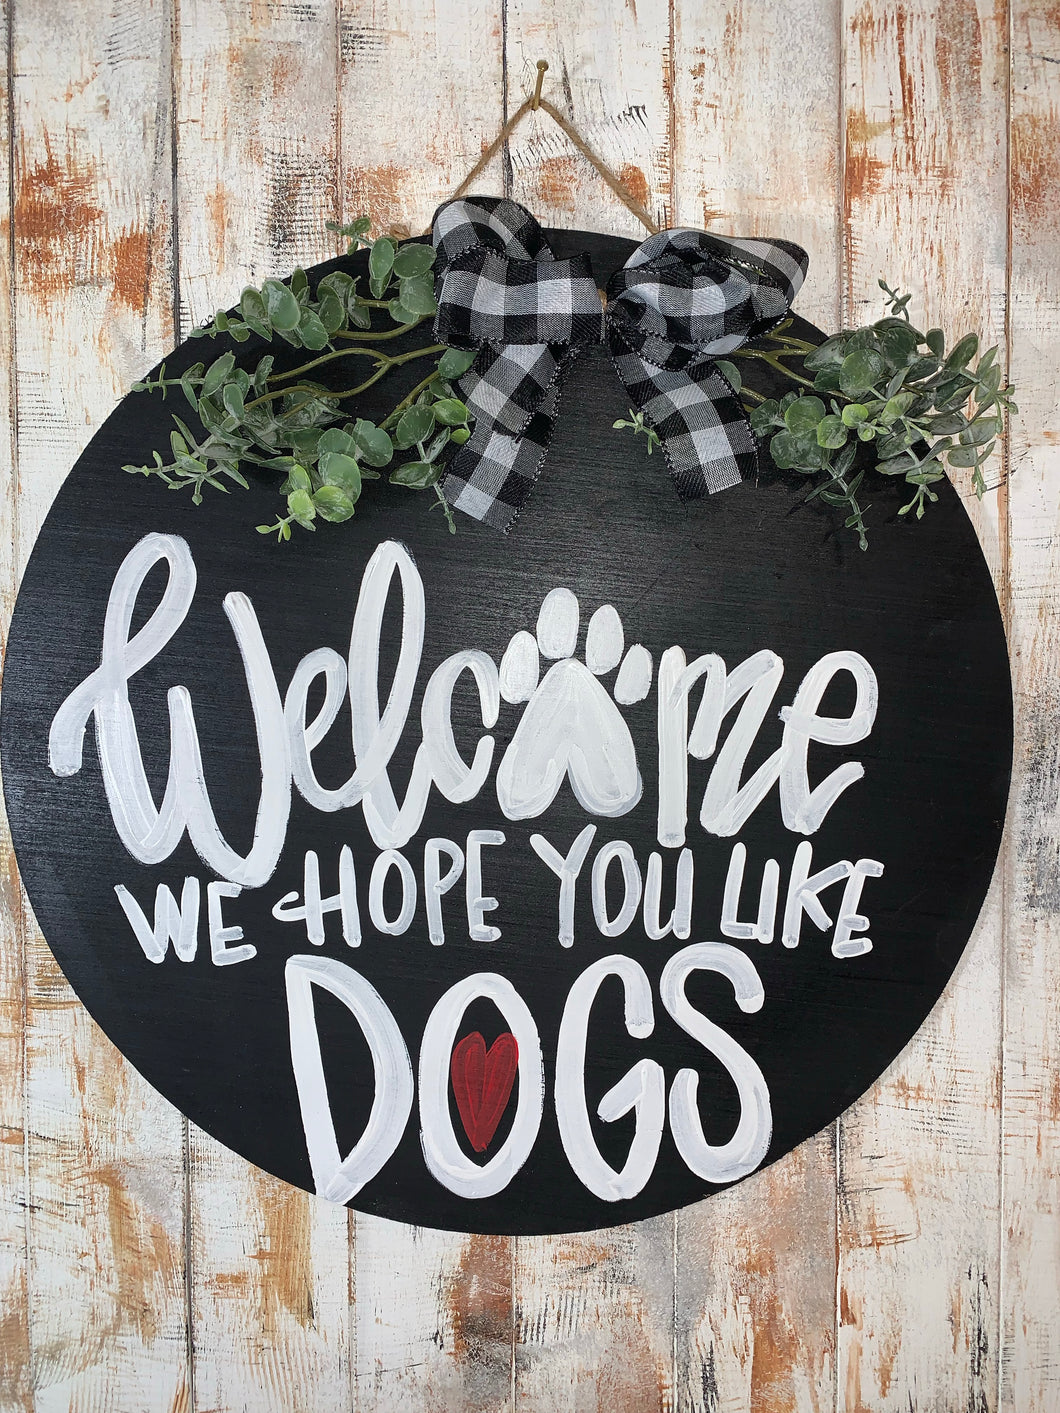 Welcome, we hope you like dogs